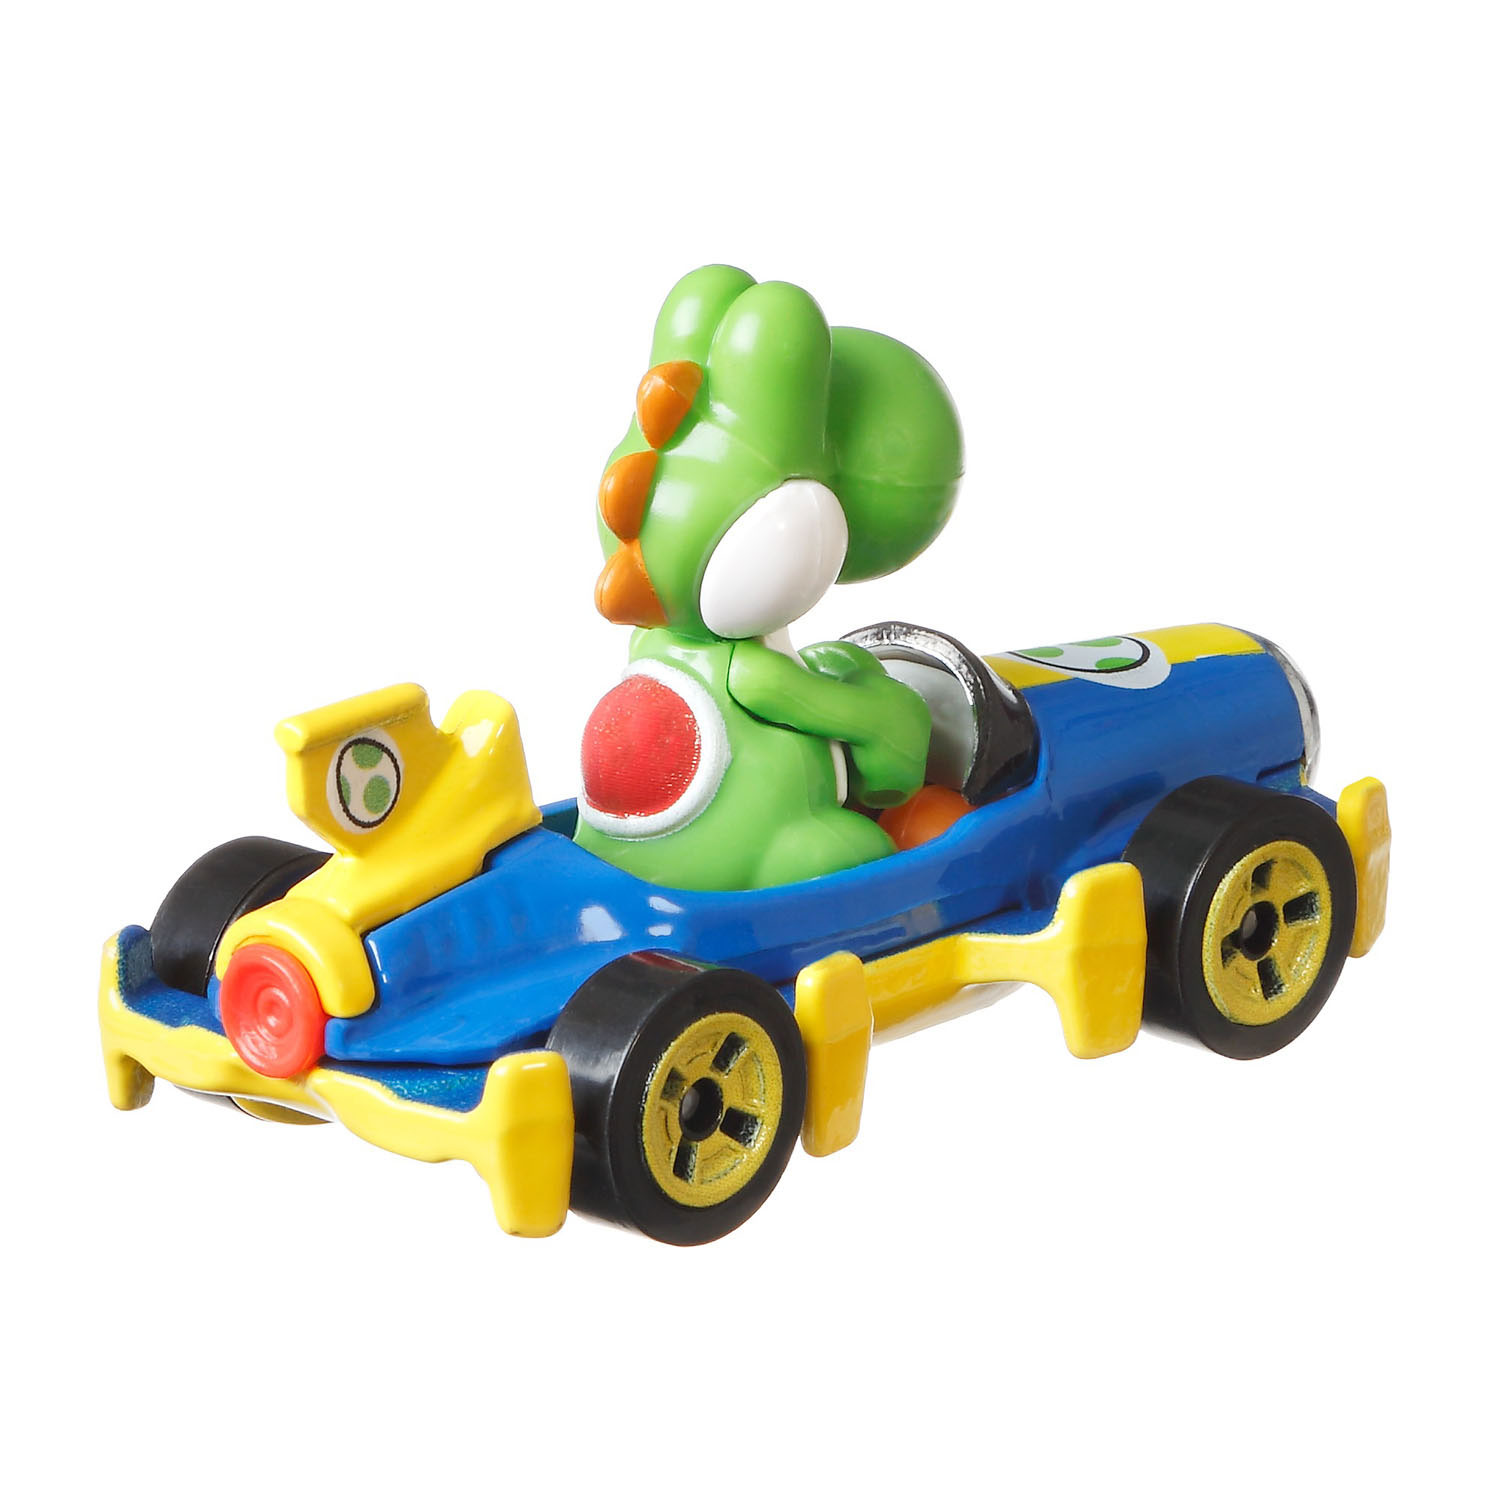 Hot Wheels Mario Kart Voertuig - Yoshi